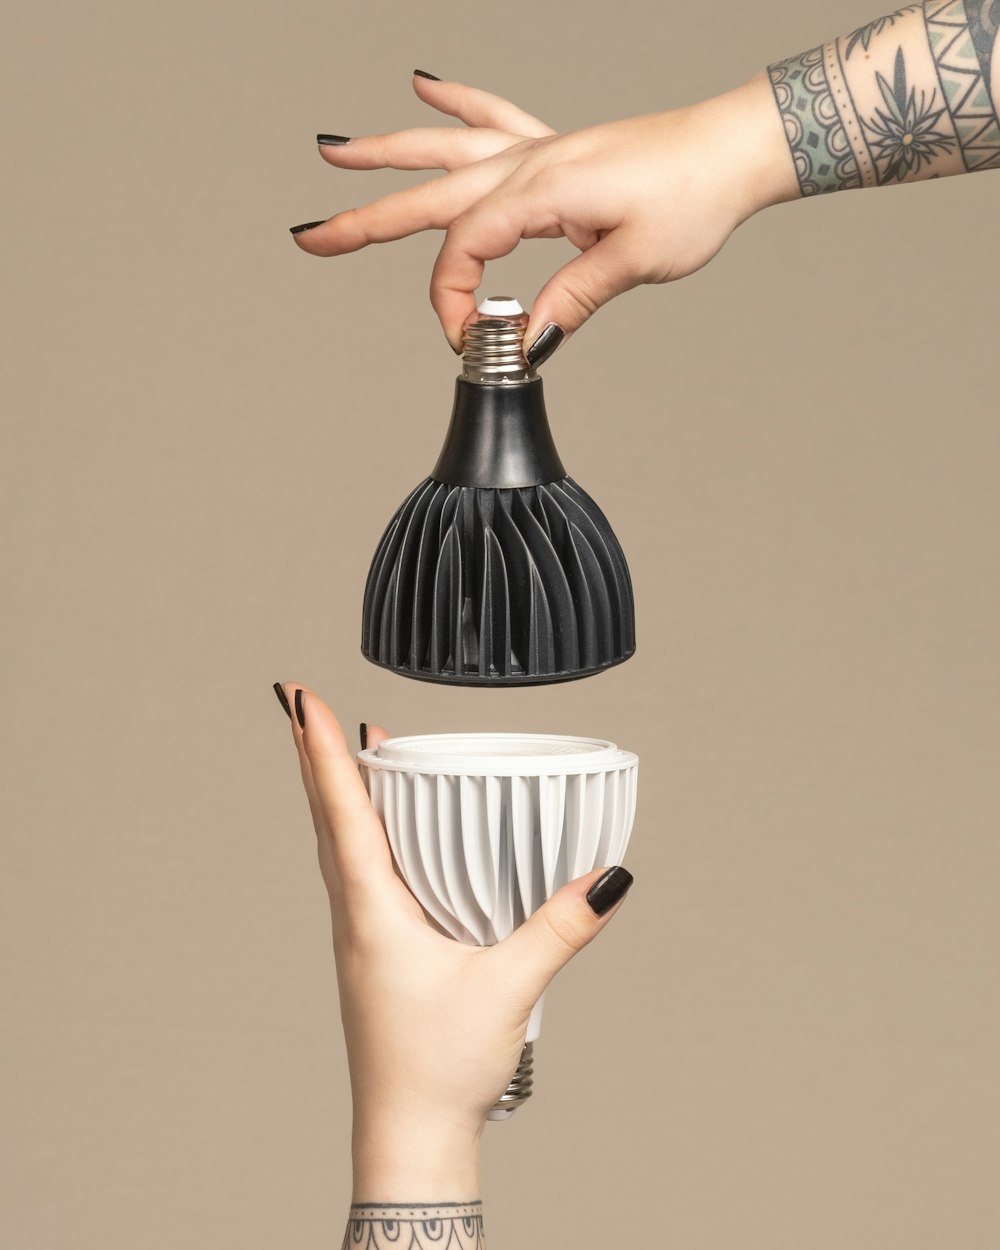 a woman's hand reaching for a light bulb